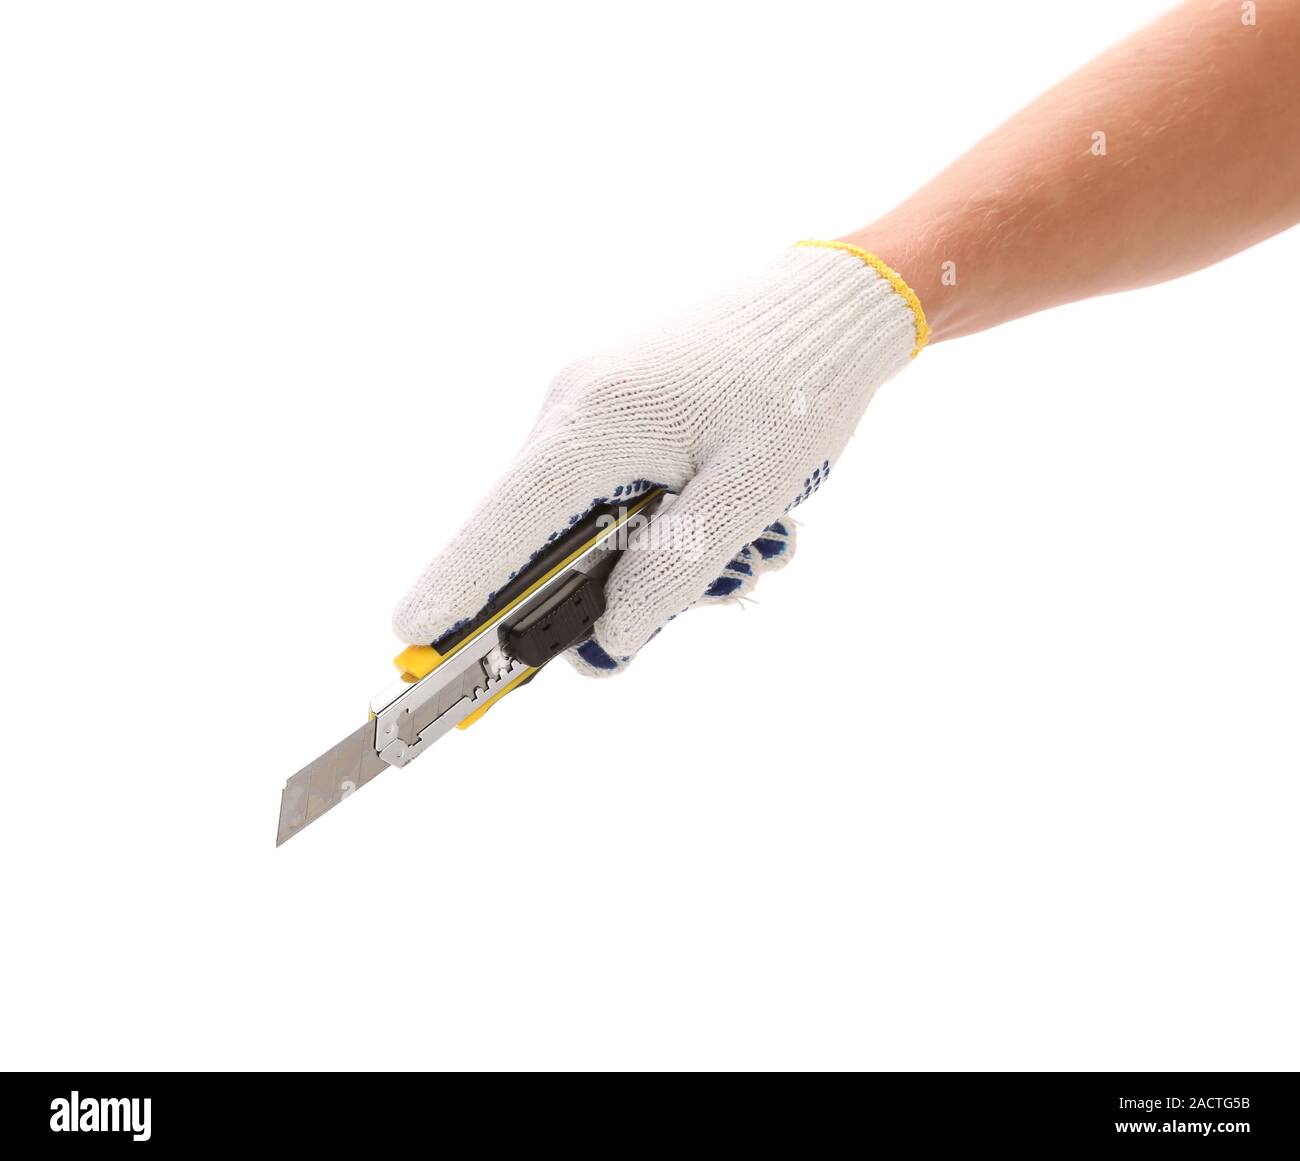 Guantes en mano sujeta la cuchilla. Foto de stock